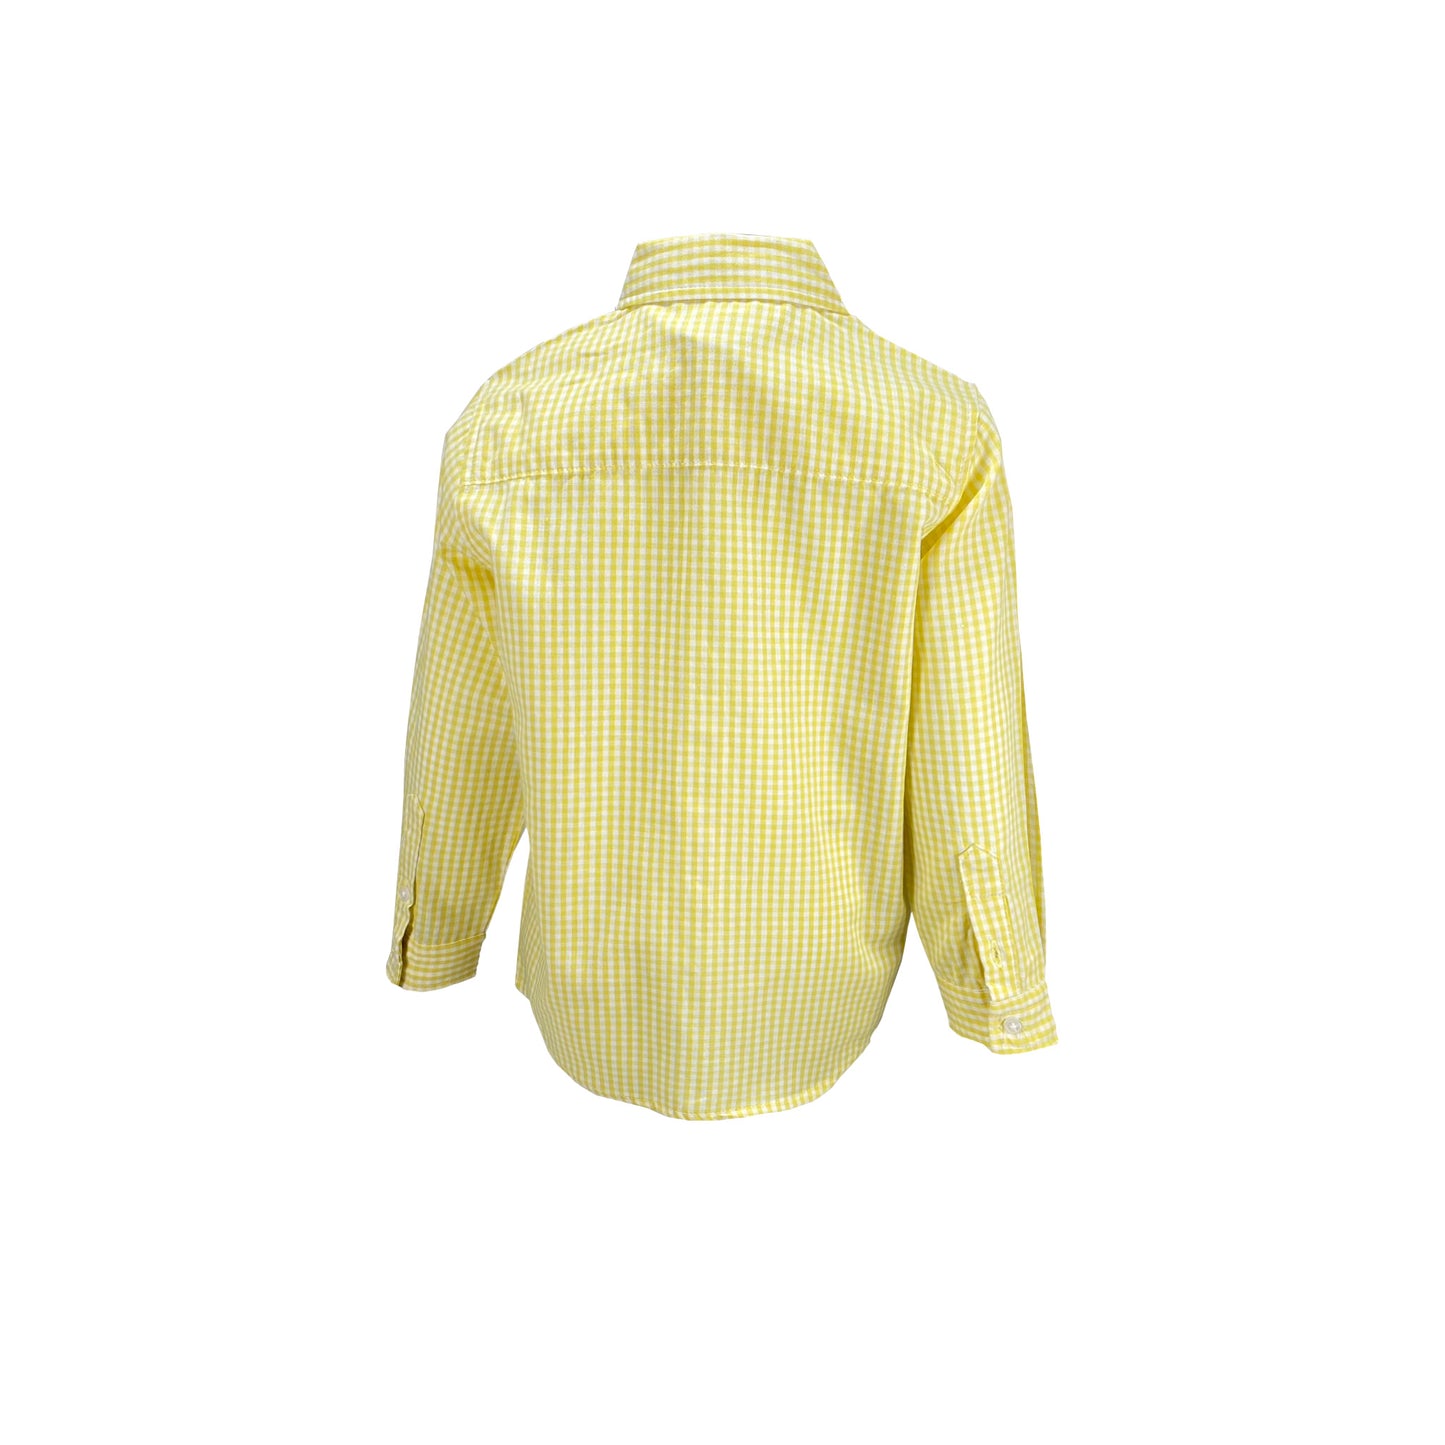 Ishtex ® Yellow Long Sleeve Button Down Shirt